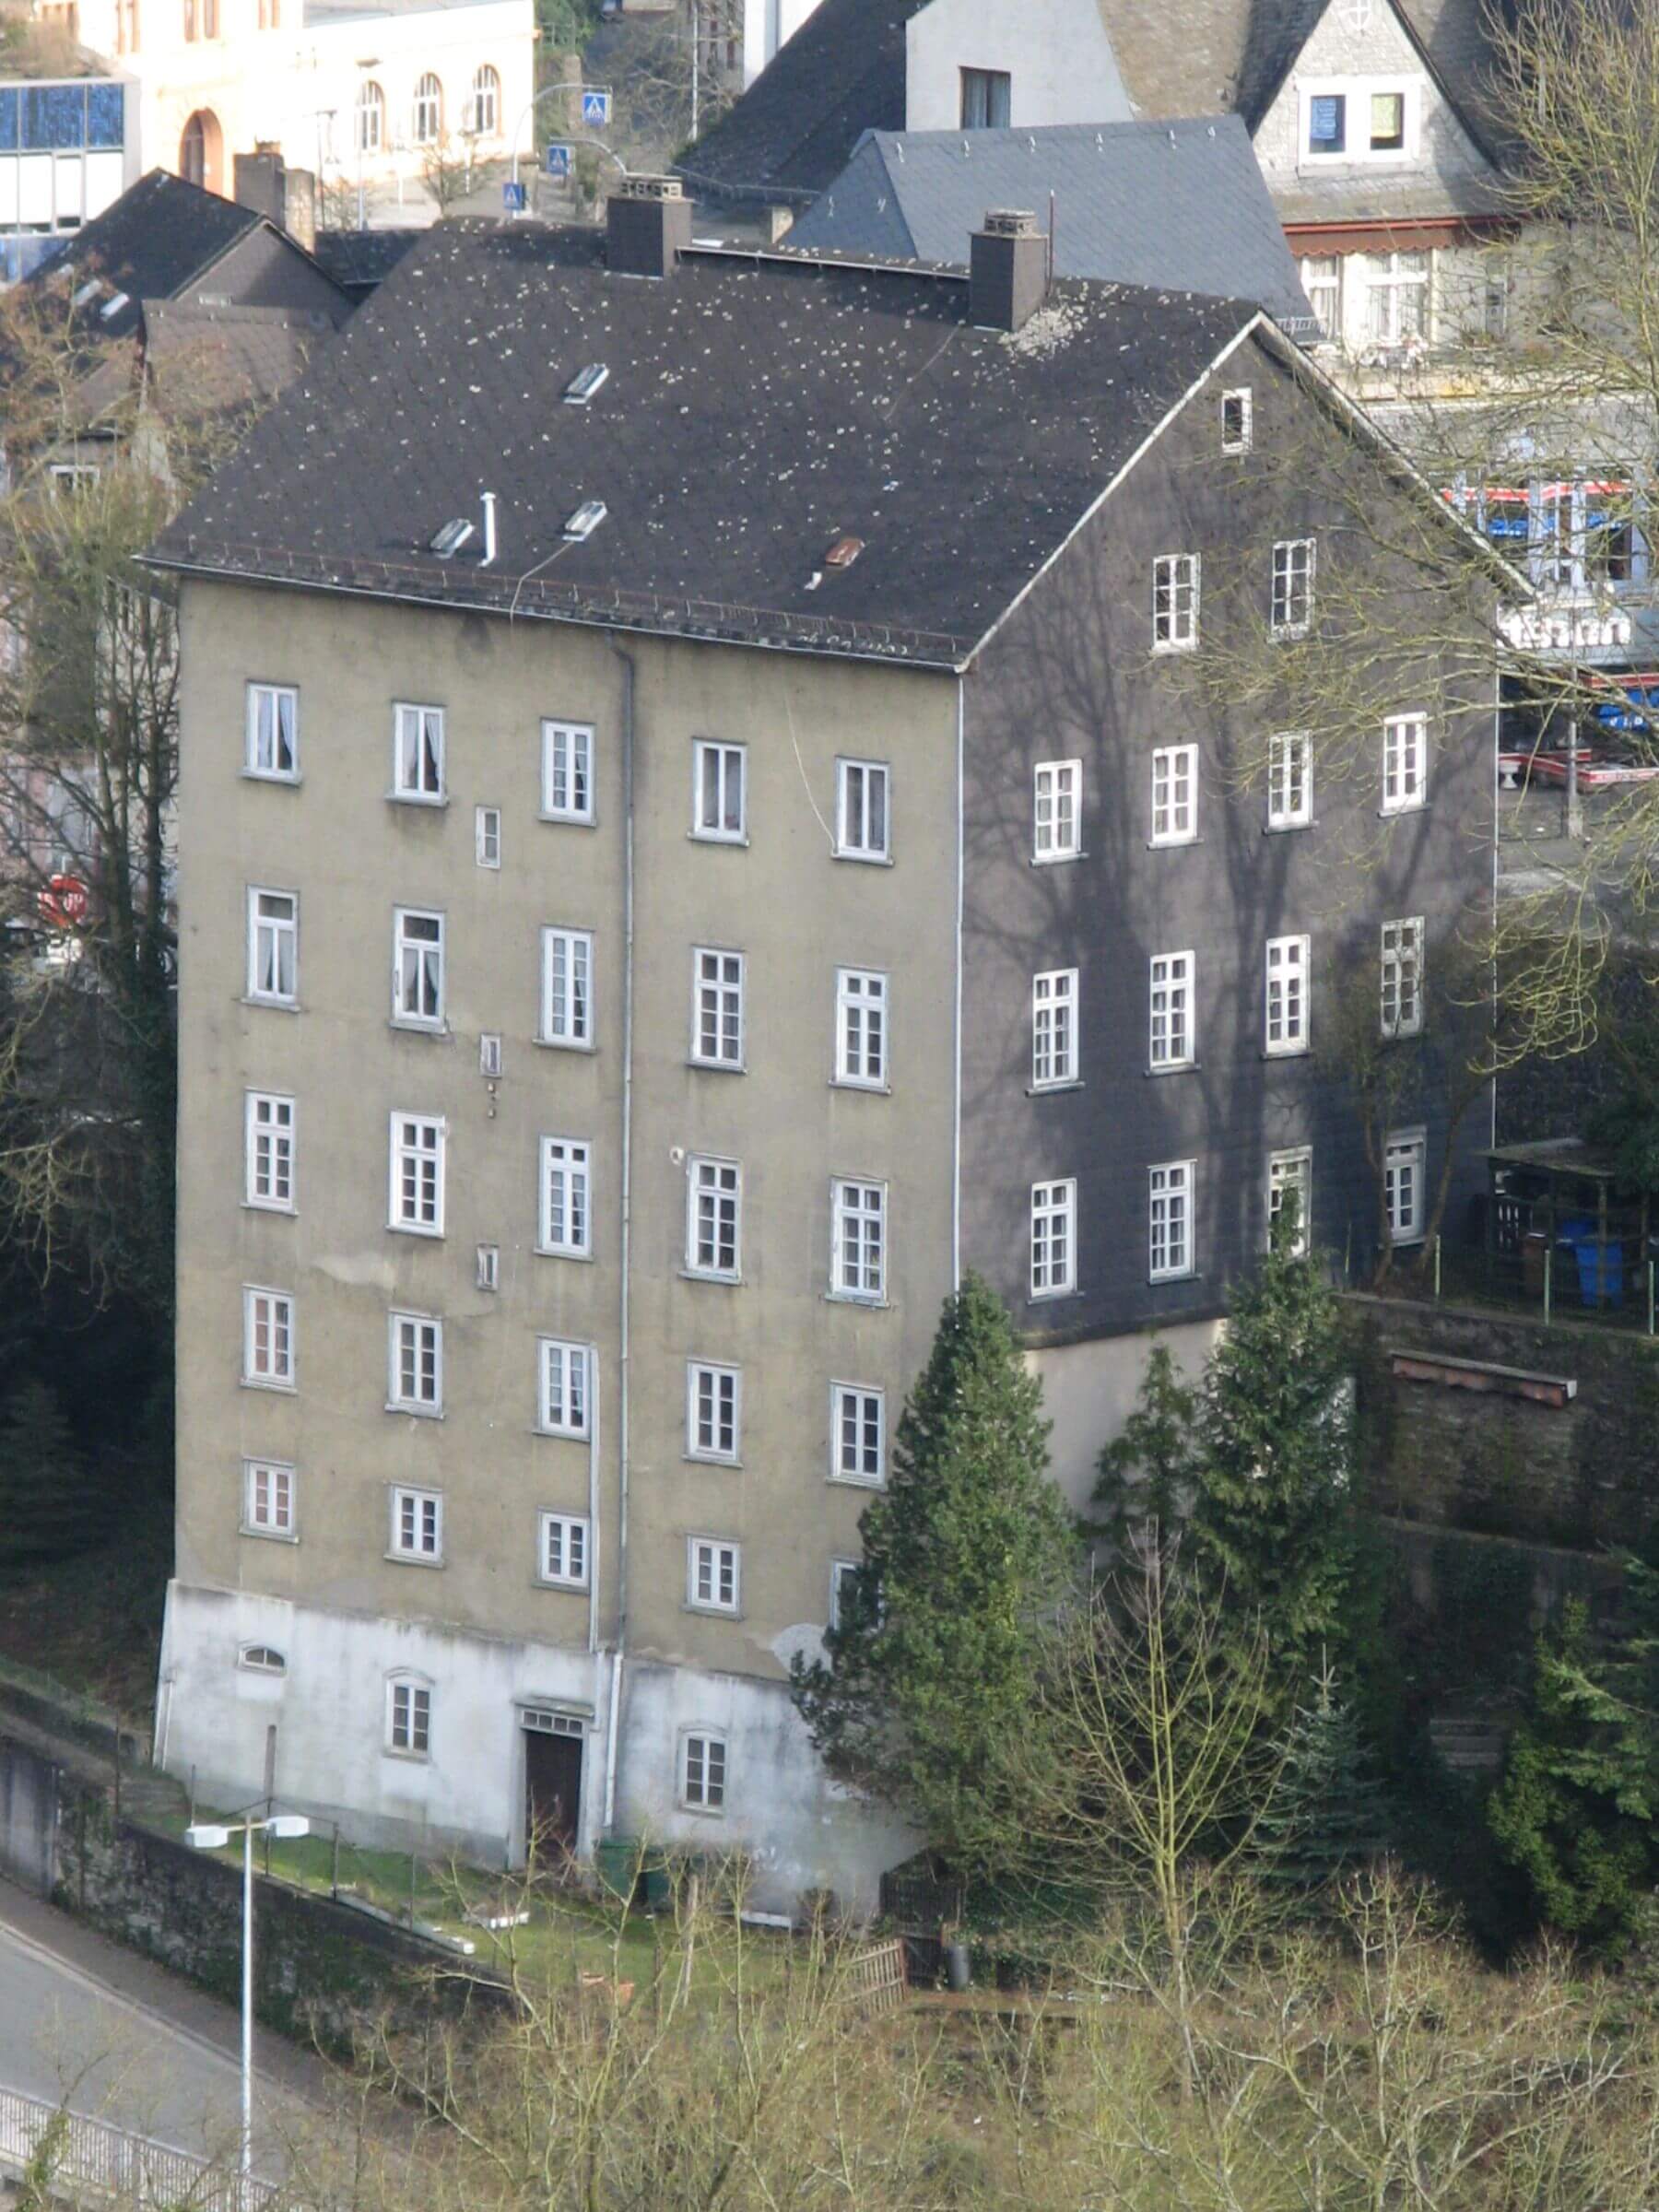 Edifício de Barro de Weilburg Alemanha